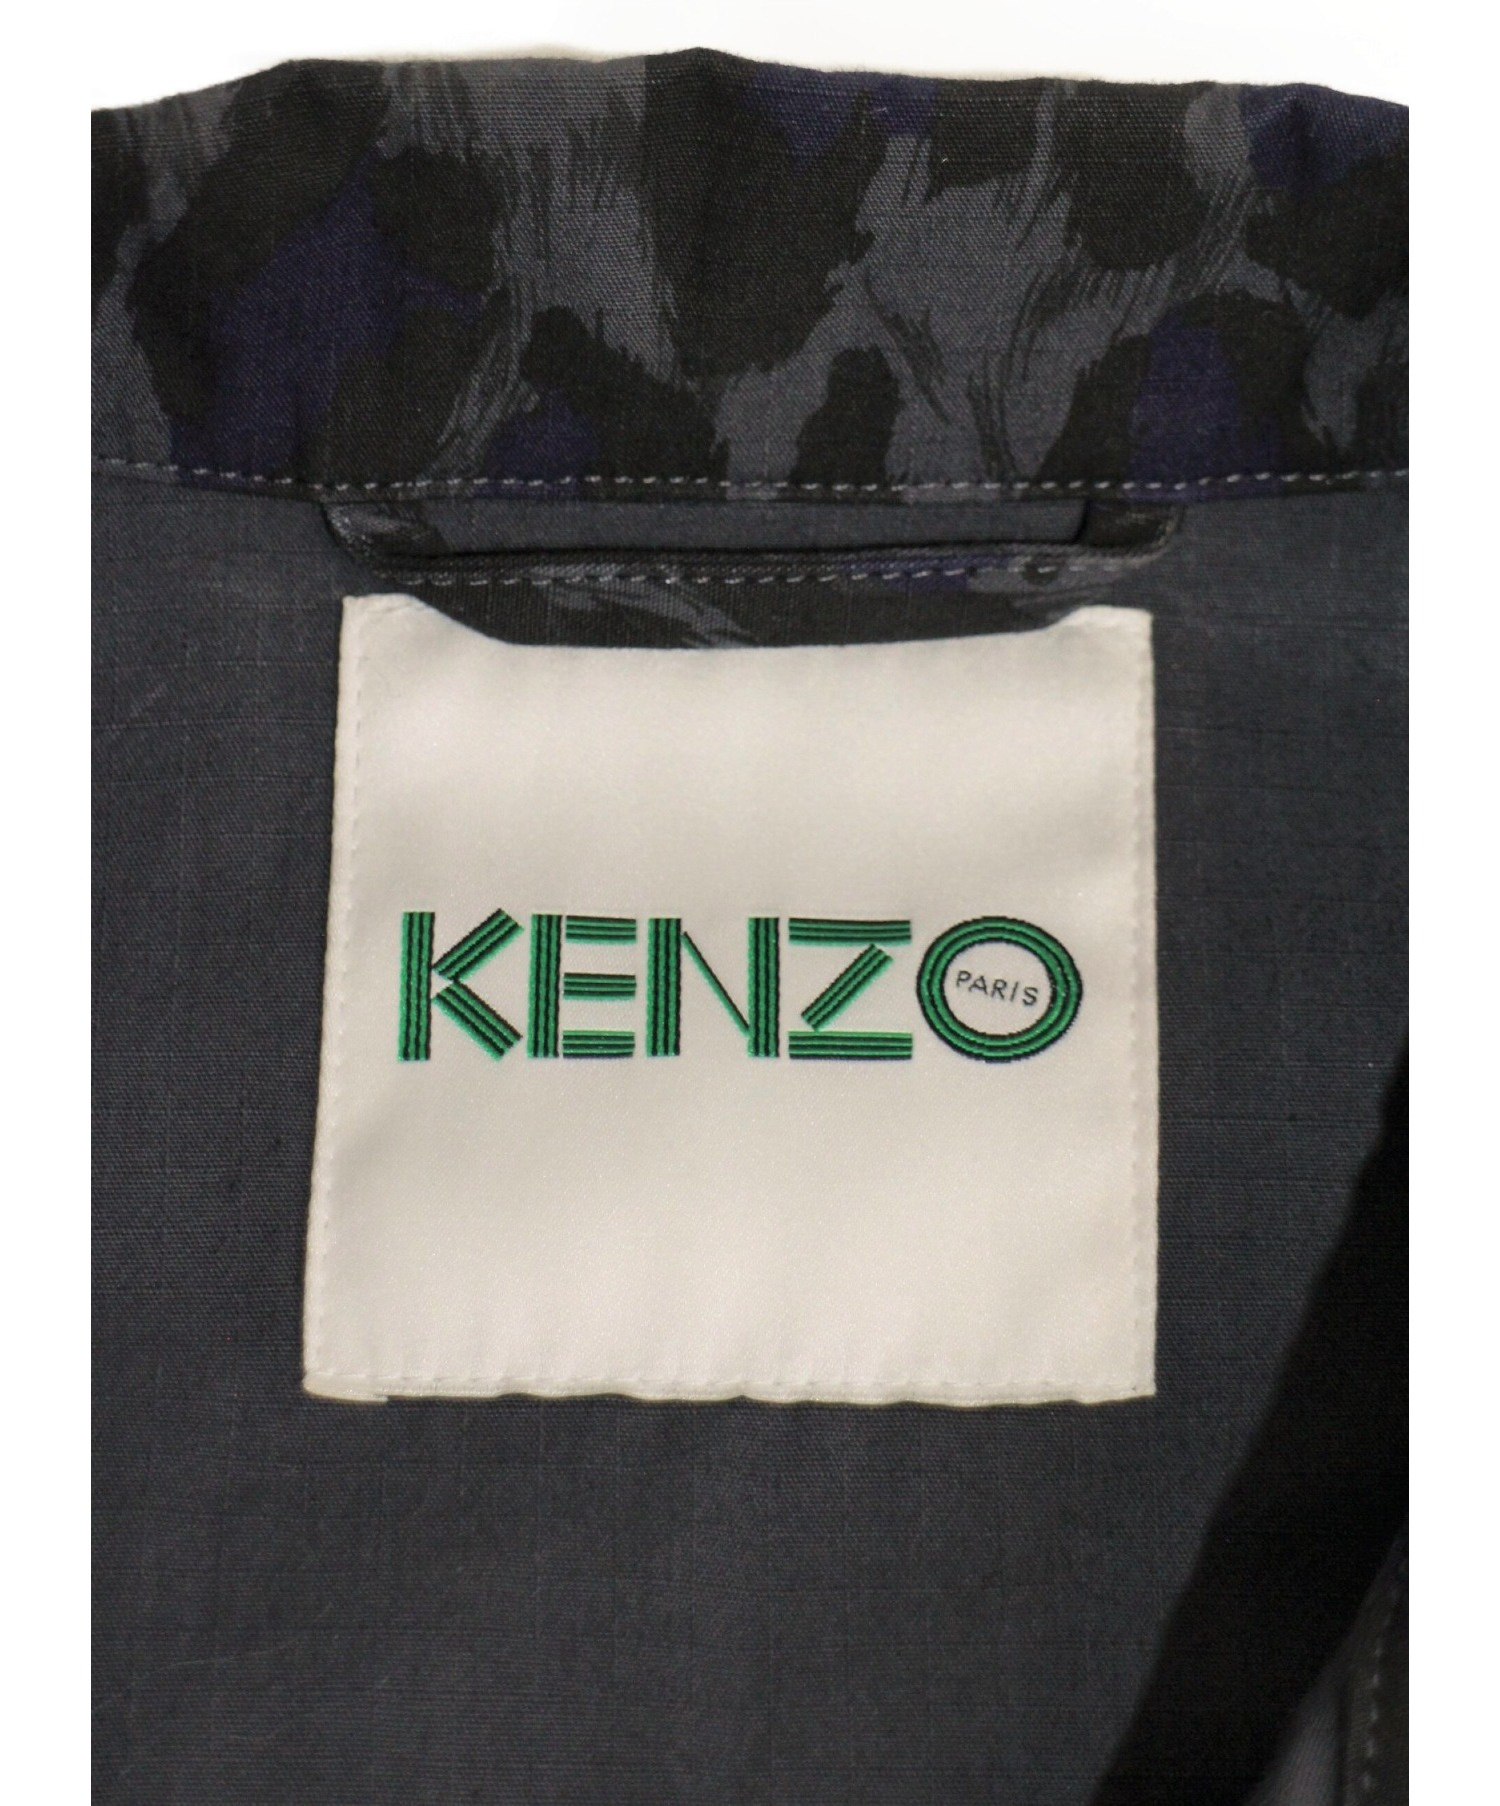 KENZO (ケンゾー) セットアップ グレー×パープル サイズ:S